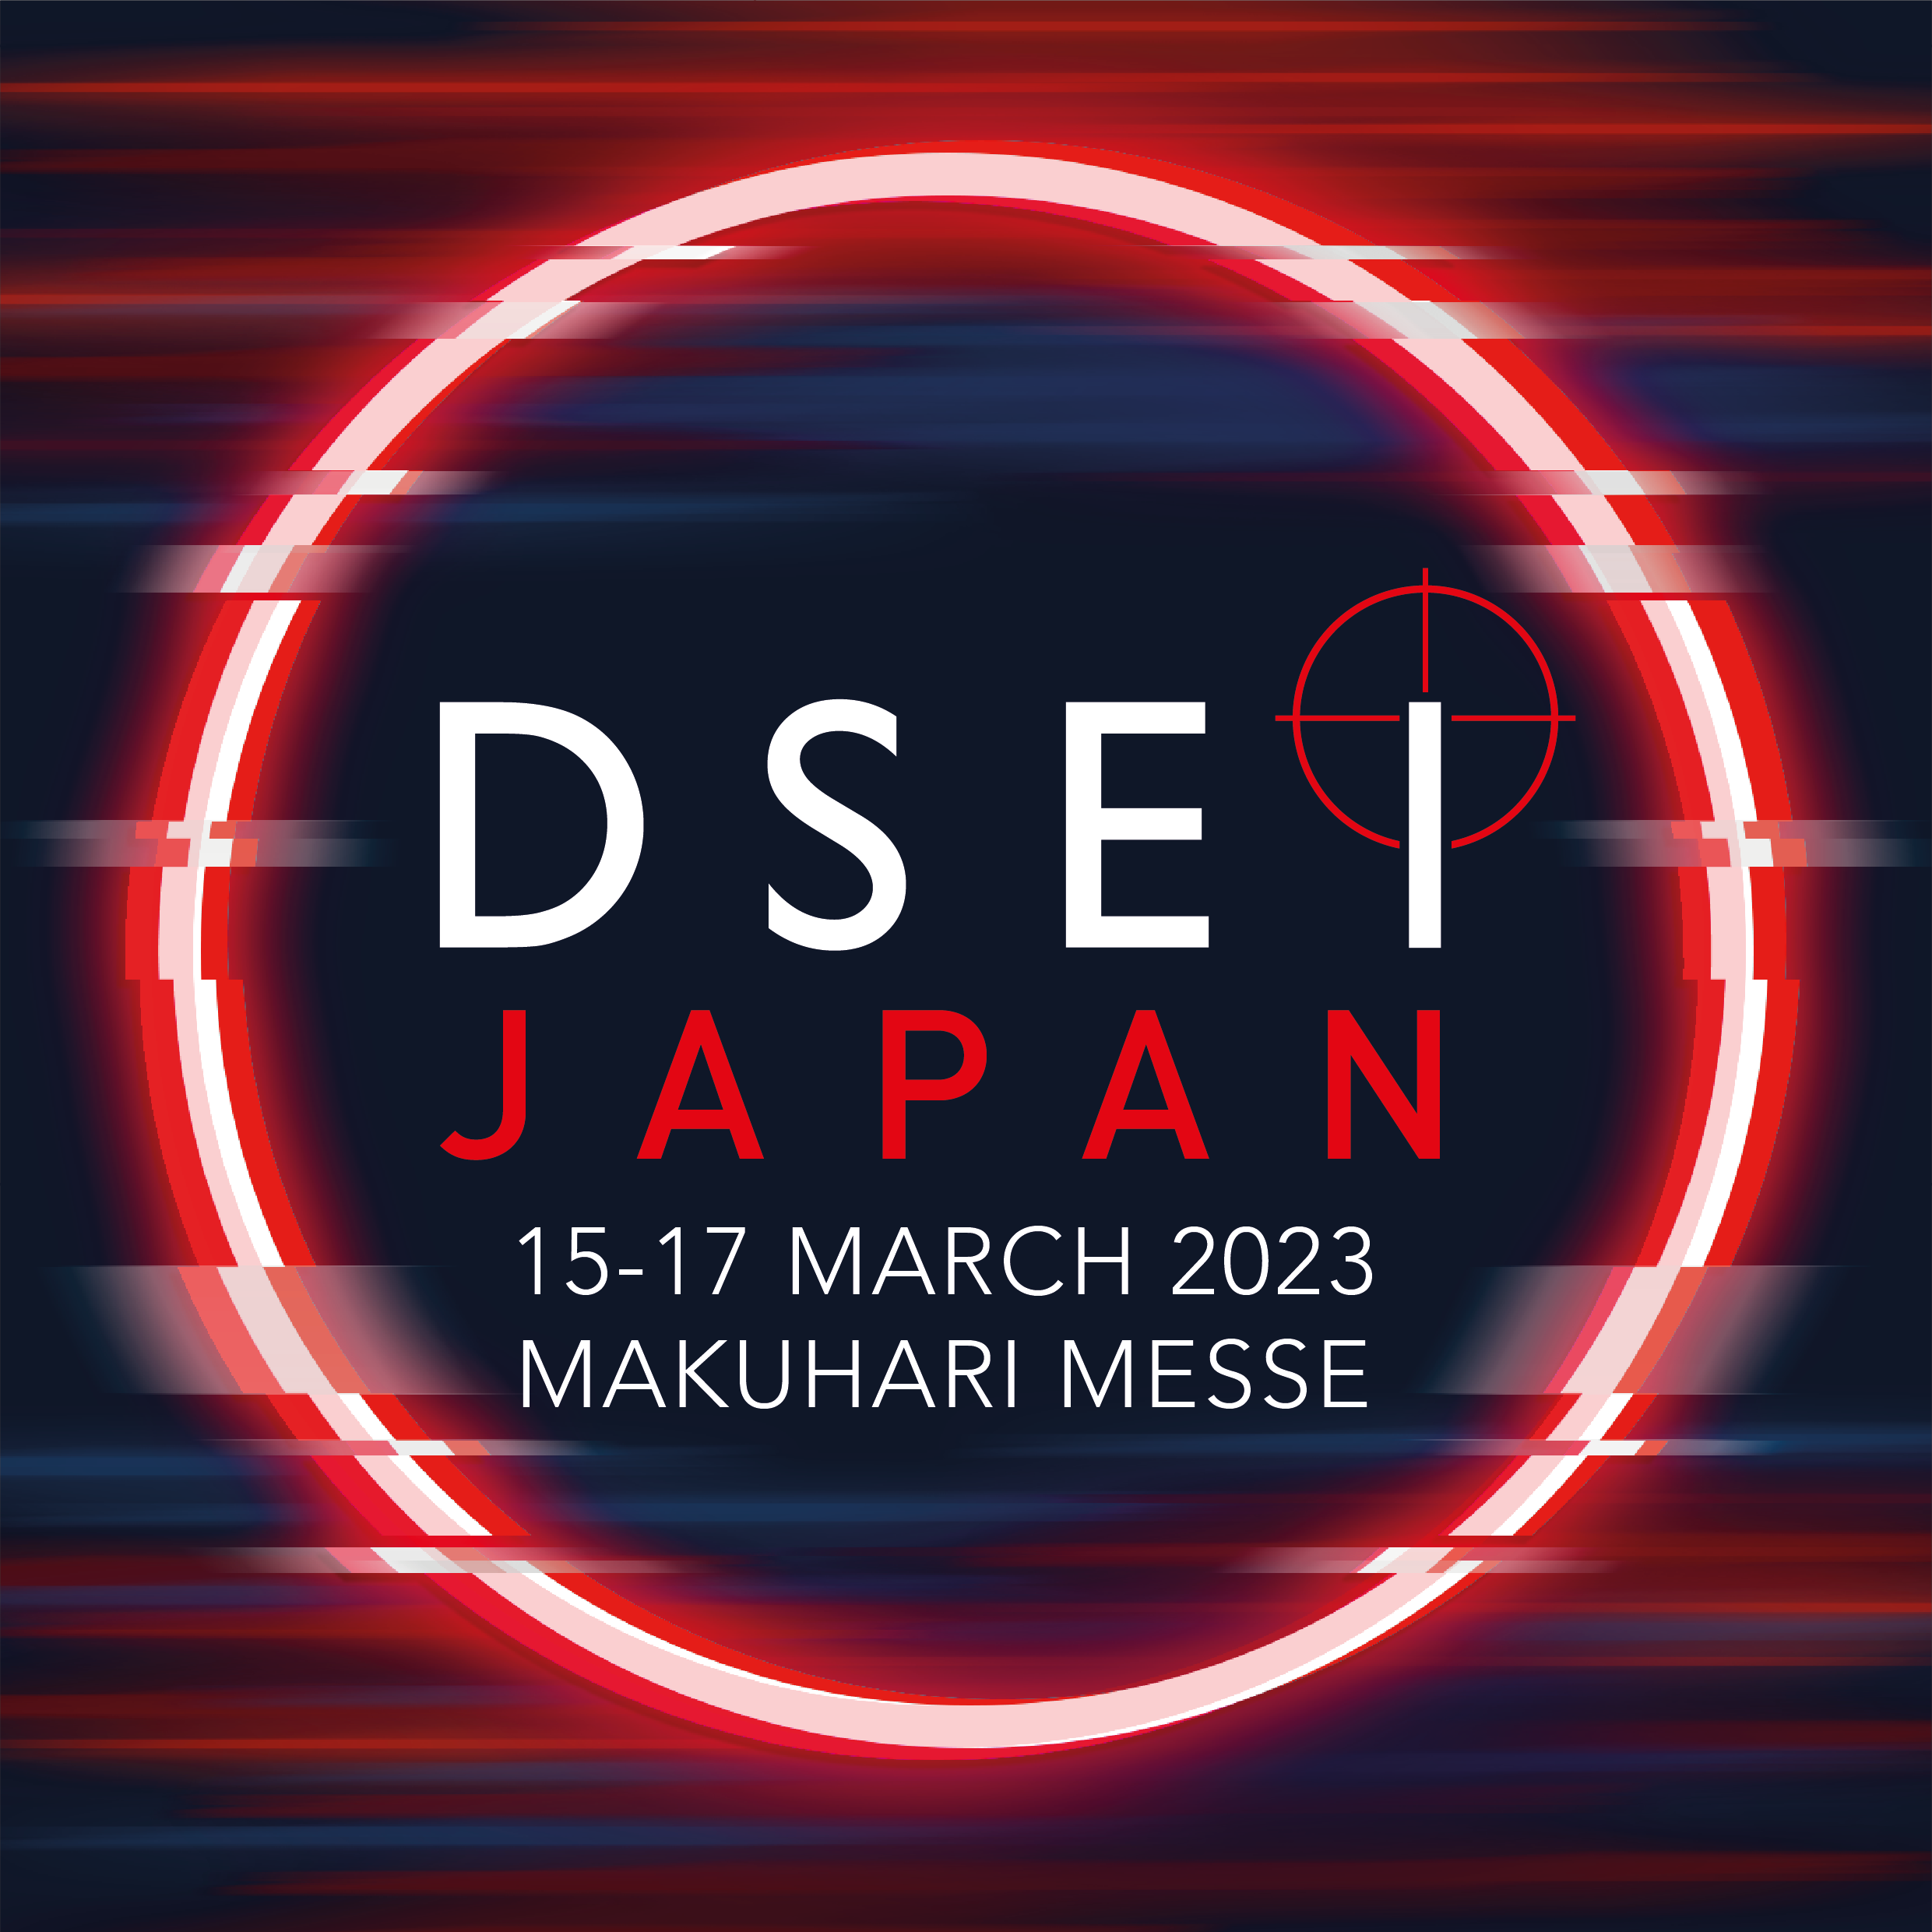 DSEI Japan logo 